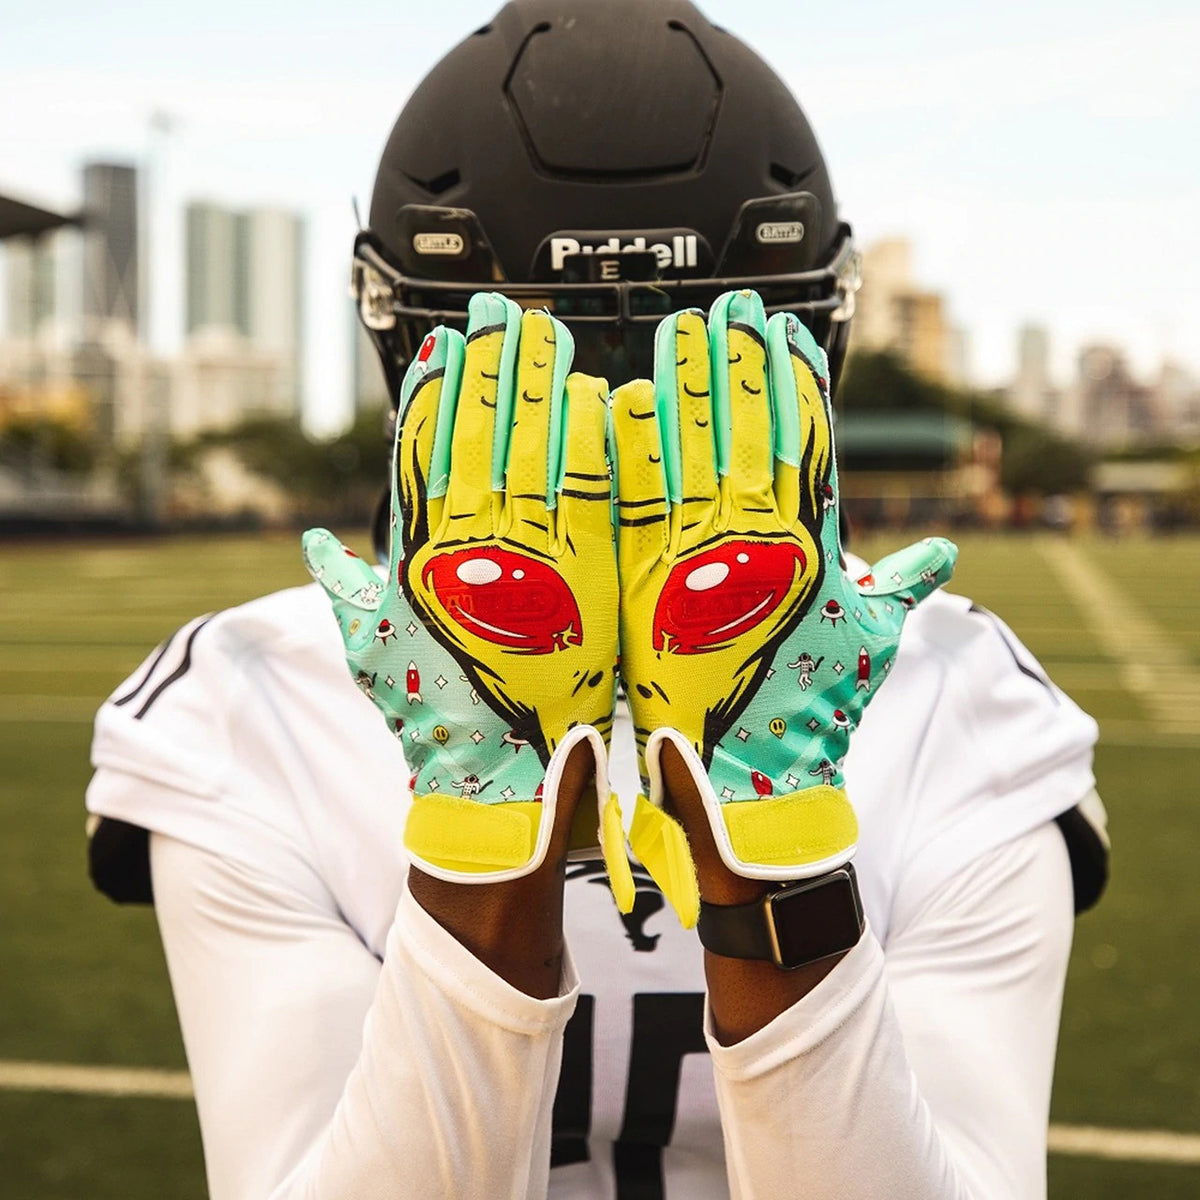 Battle Sports Alien Cloaked Adult Football Gloves - Turquoise/Green Battle Sports